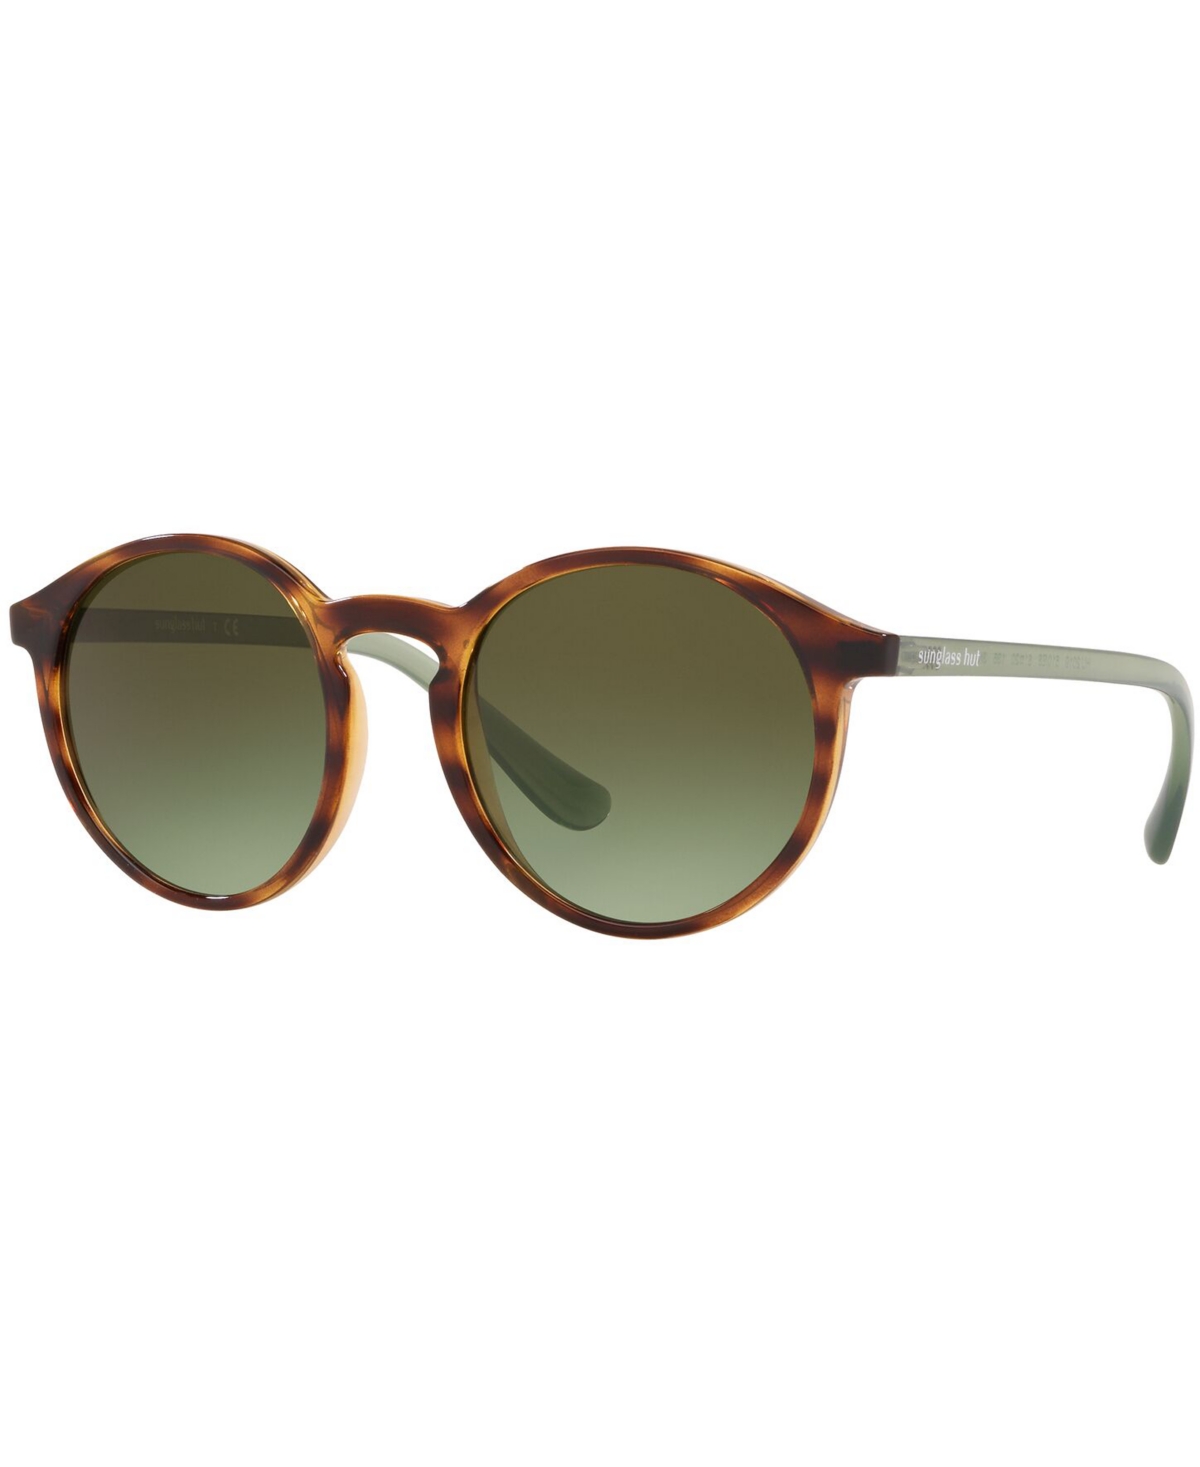 Sunglasses, 0HU2019 - SHINY STRIPTED HAVANA/GRADIENT GREEN